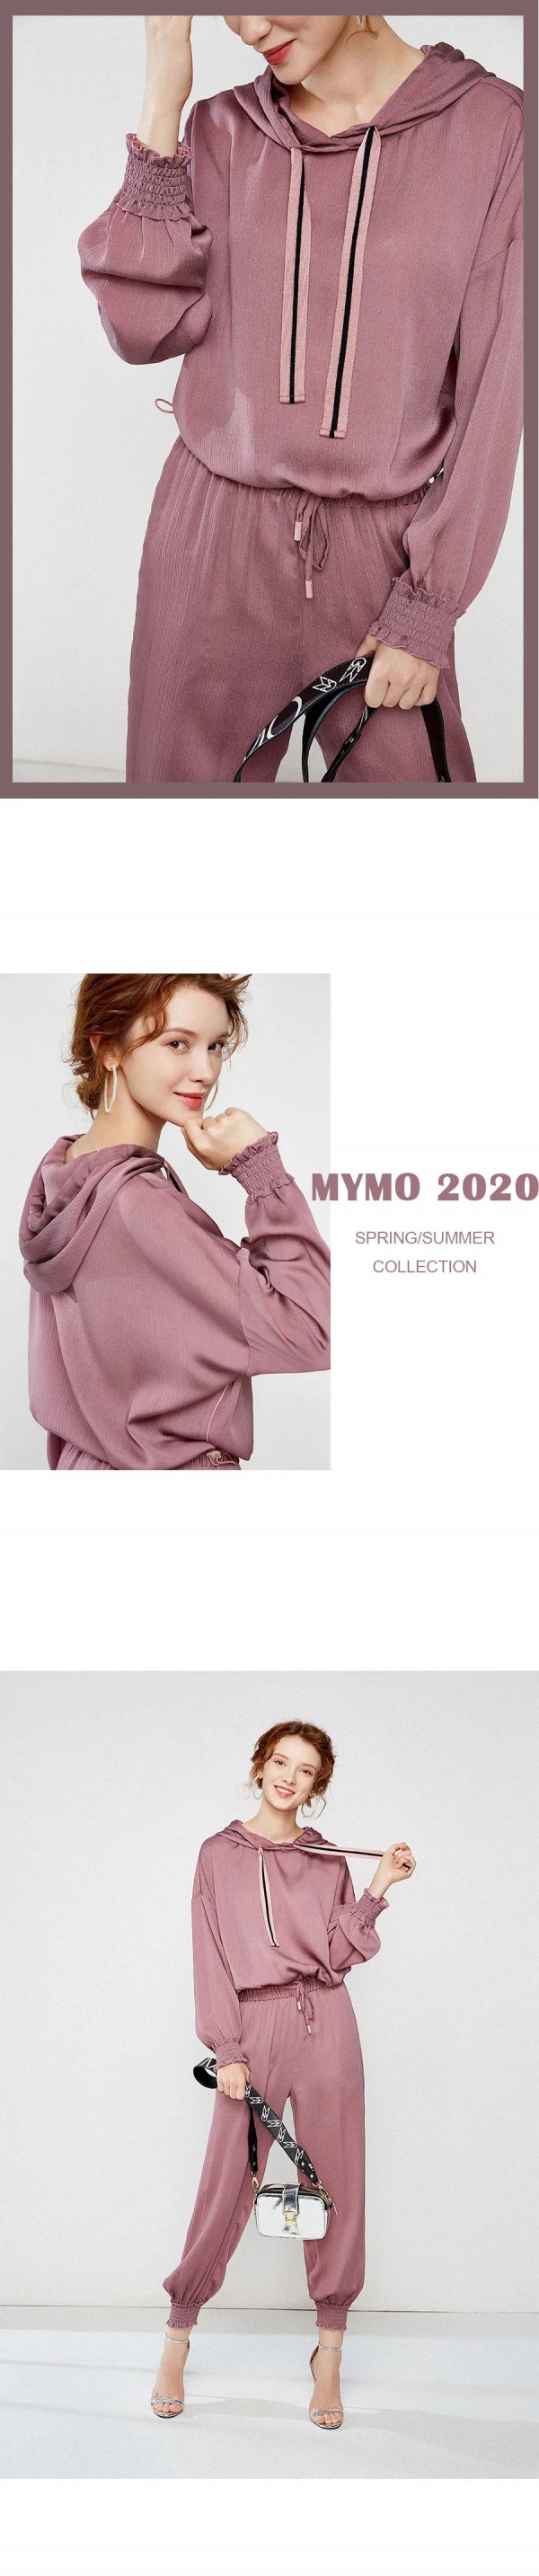 MYMO女装品牌2020夏季新品 释放束缚